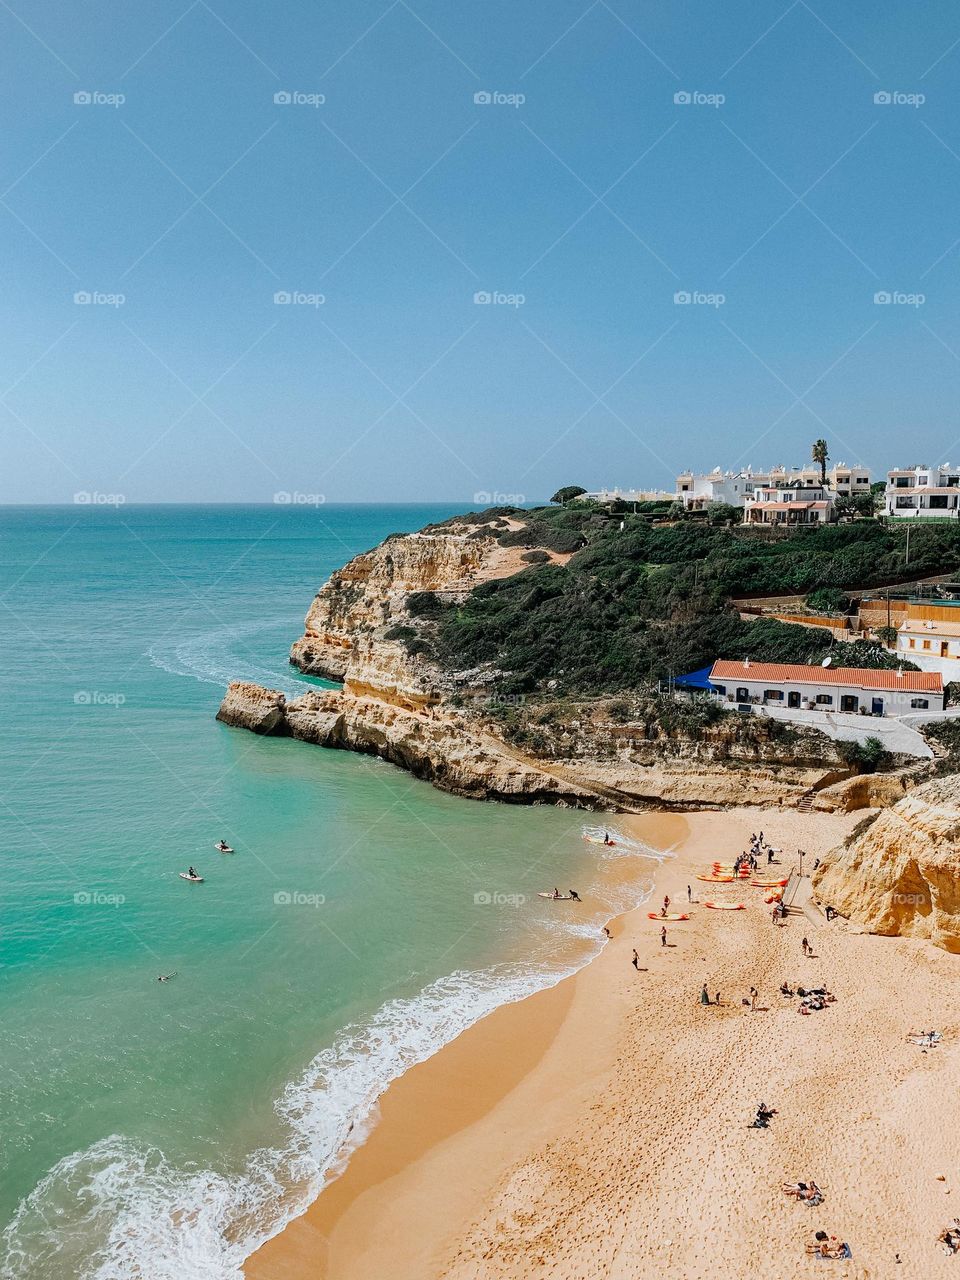 People on the beach in benagil Portugal. 